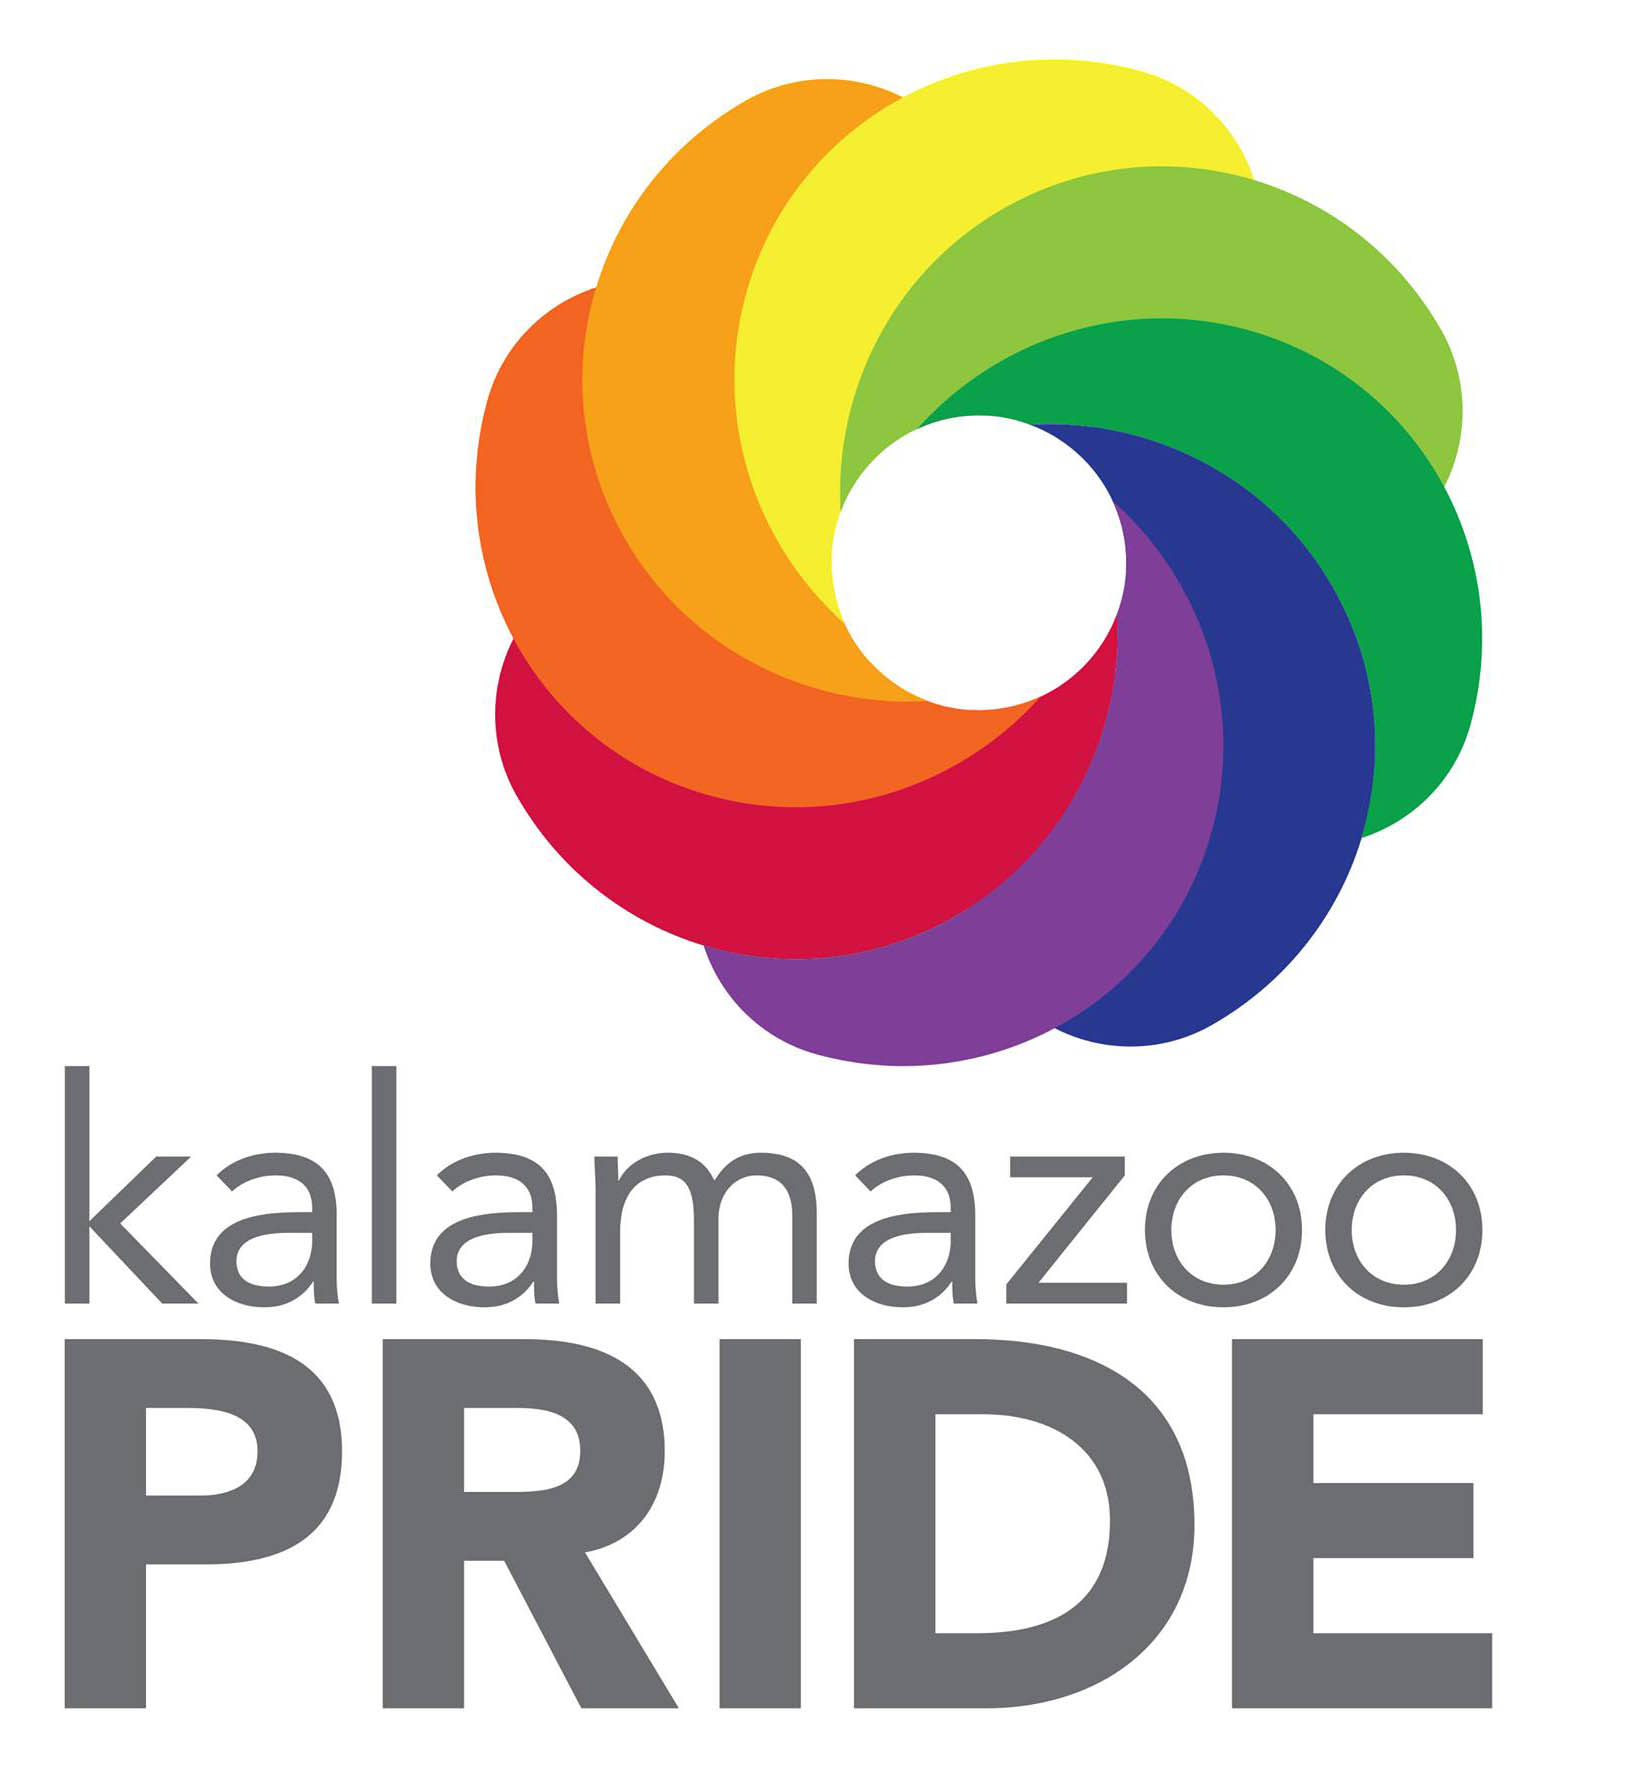 Kalamazoo Pride